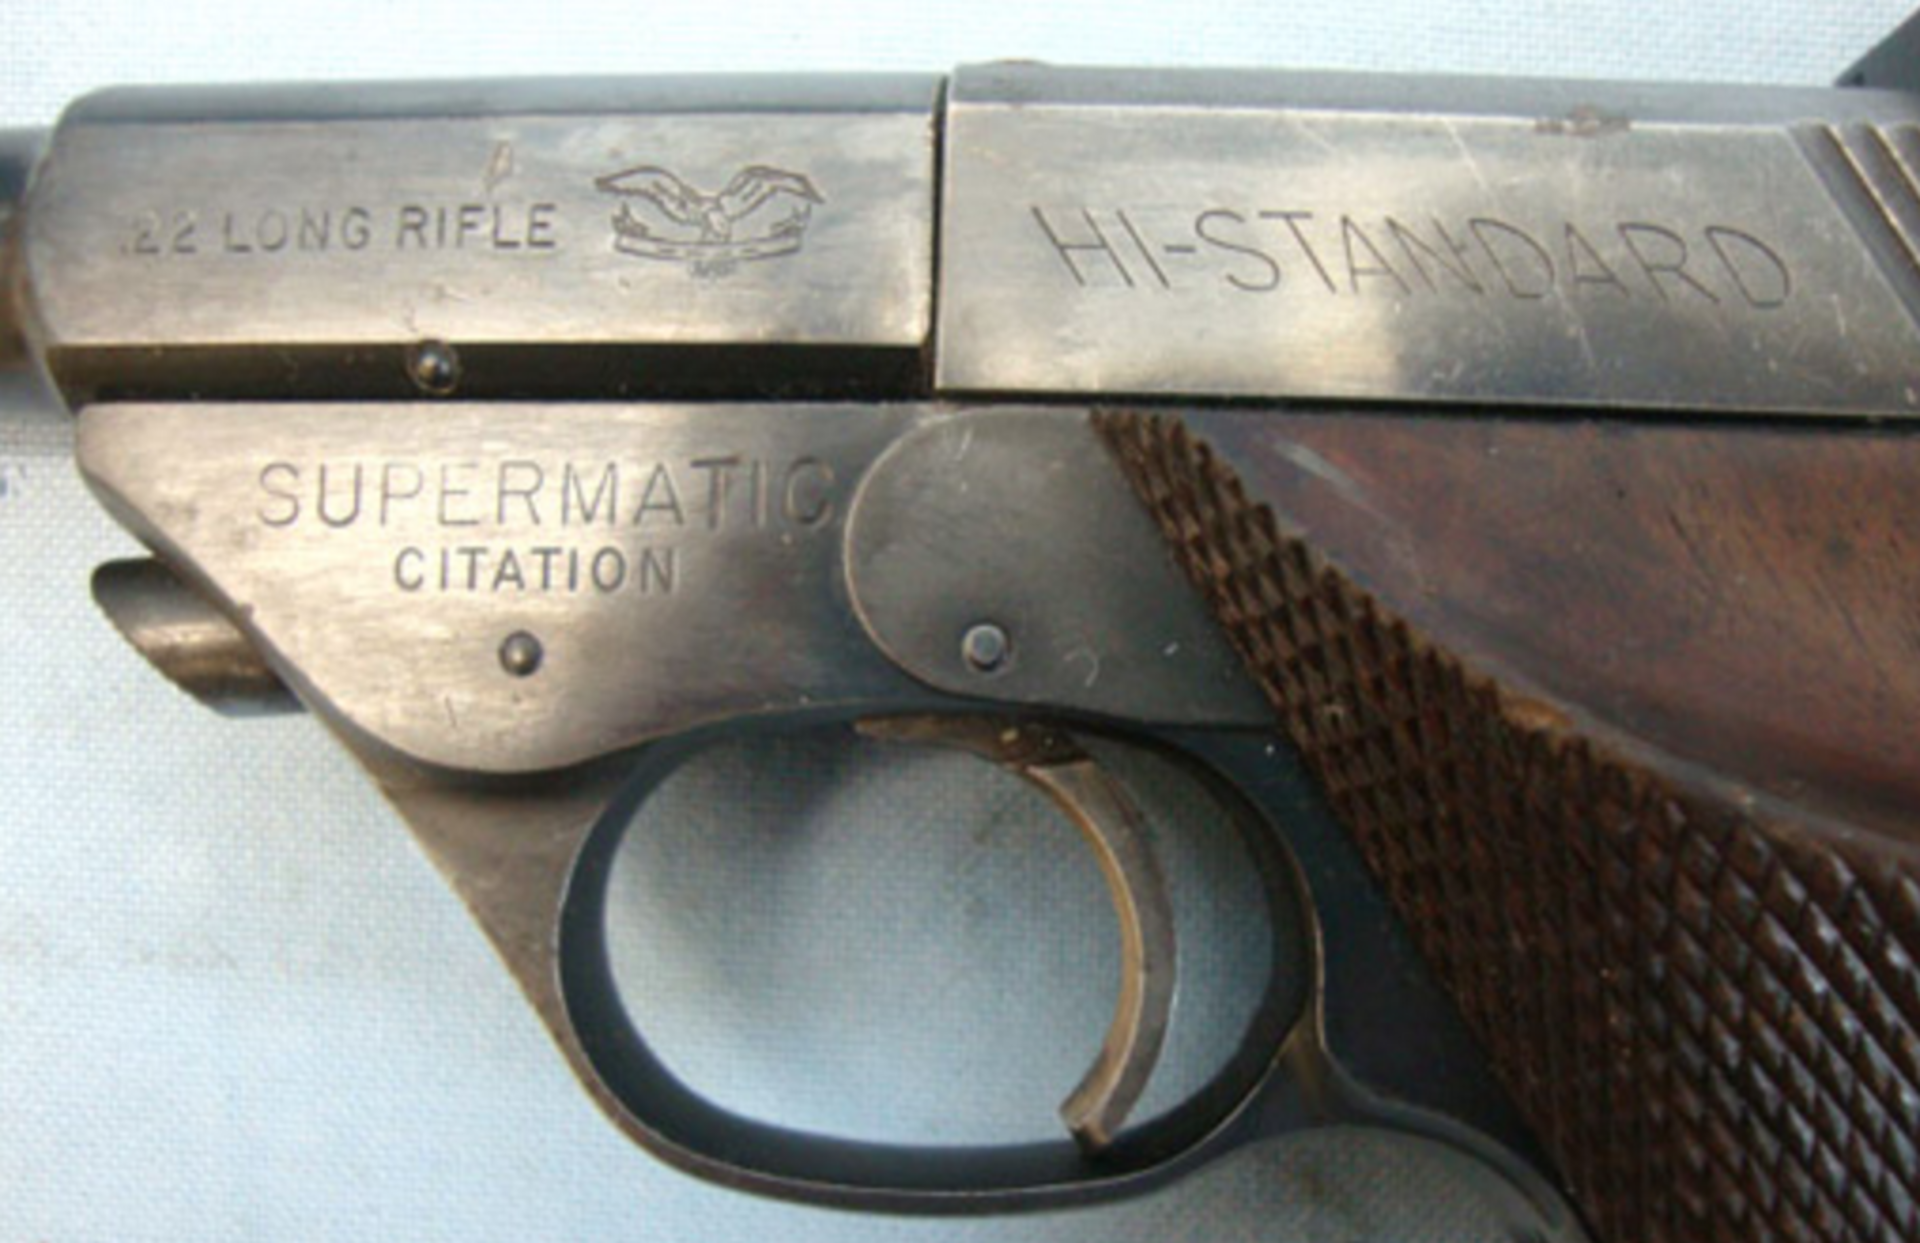 1960-1963 High Standard Supermatic Citation Model 103 .22 LR Semi Automatic Pistol - Image 2 of 3